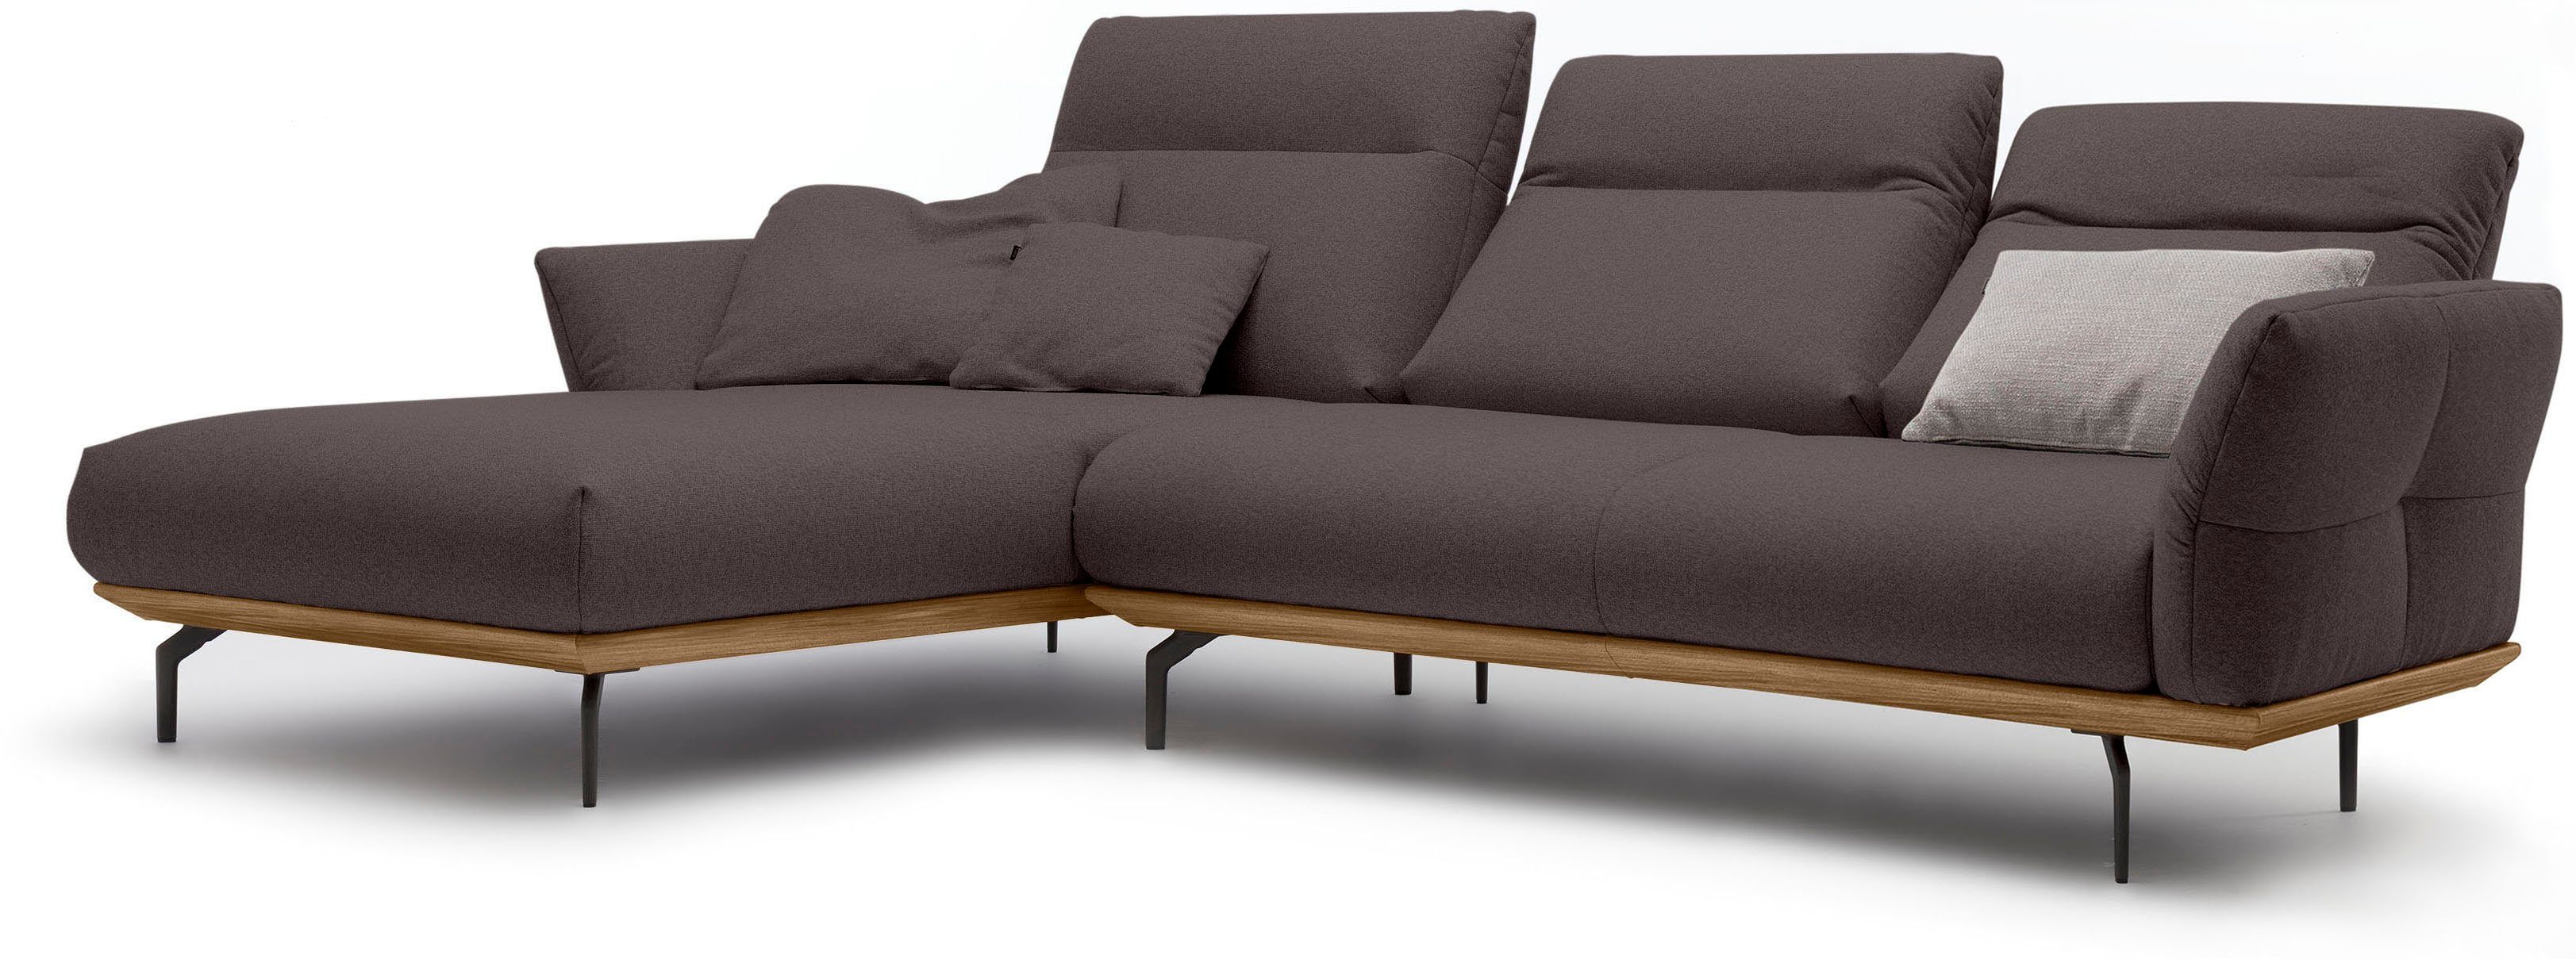 Sockel Breite Nussbaum, 298 Ecksofa cm Umbragrau, sofa in in hs.460, hülsta Winkelfüße